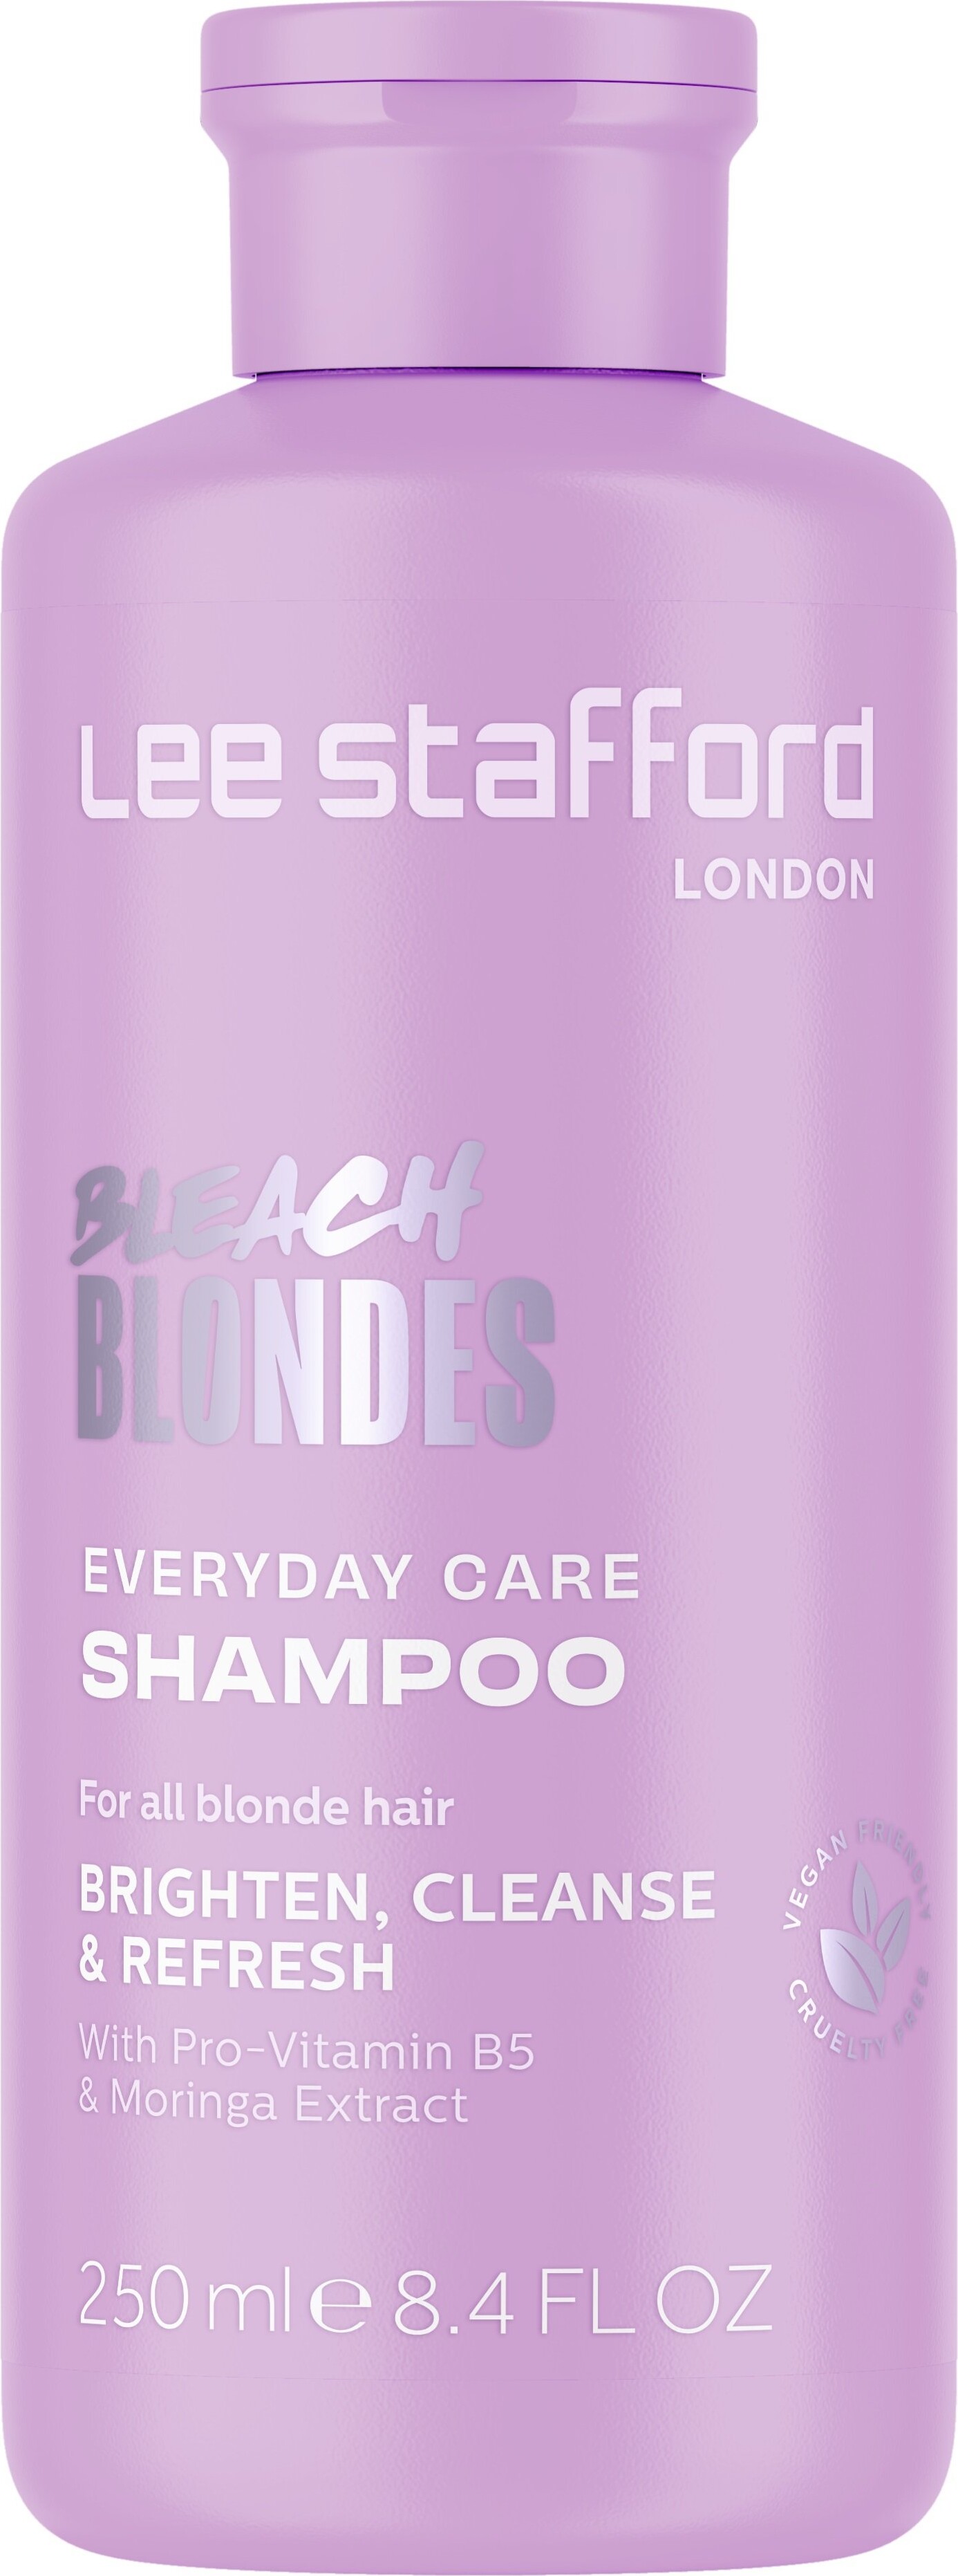 Se Lee Stafford - Bleach Blondes Everyday Care Shampoo - 250 Ml hos Gucca.dk